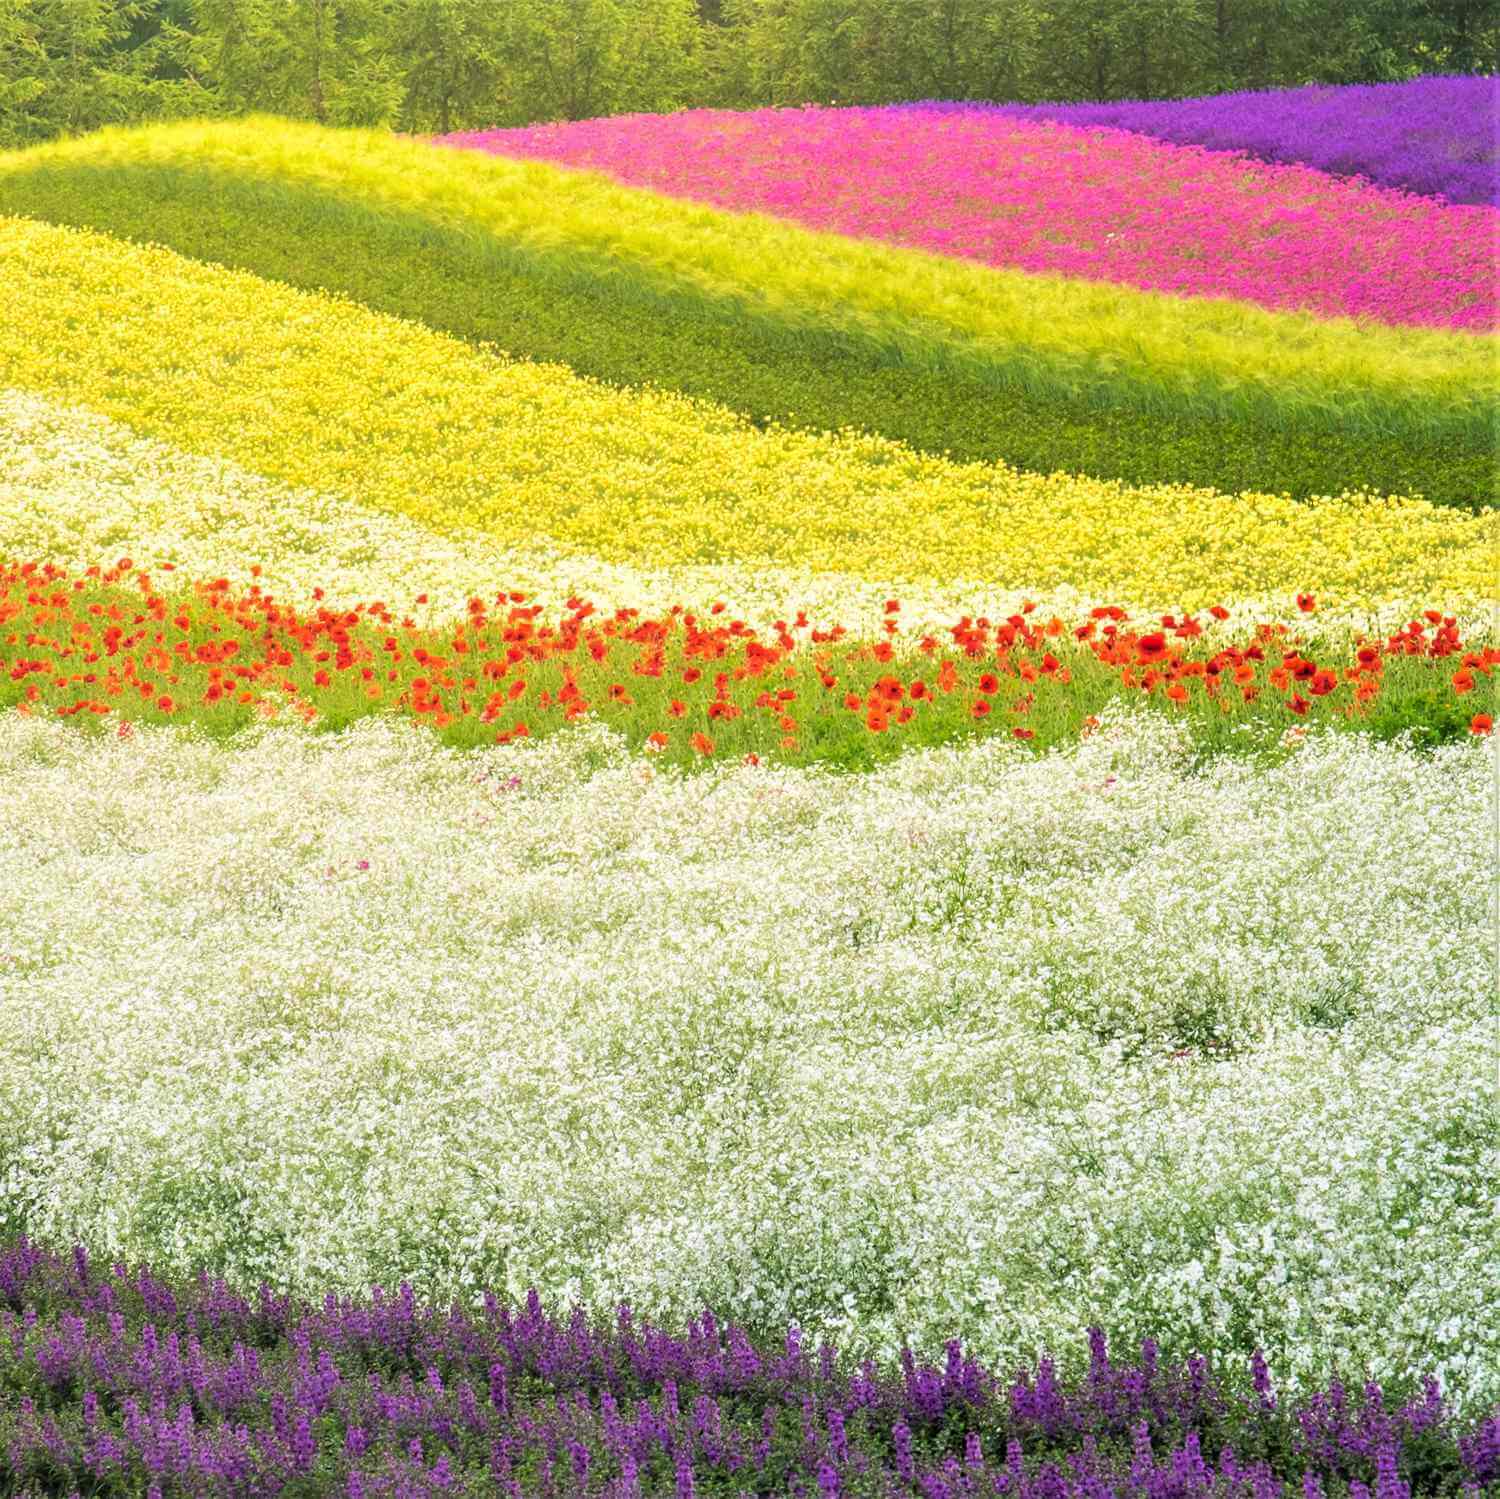 Landscapes of Hokkaido's summer flower gardens = AdobeStock 3